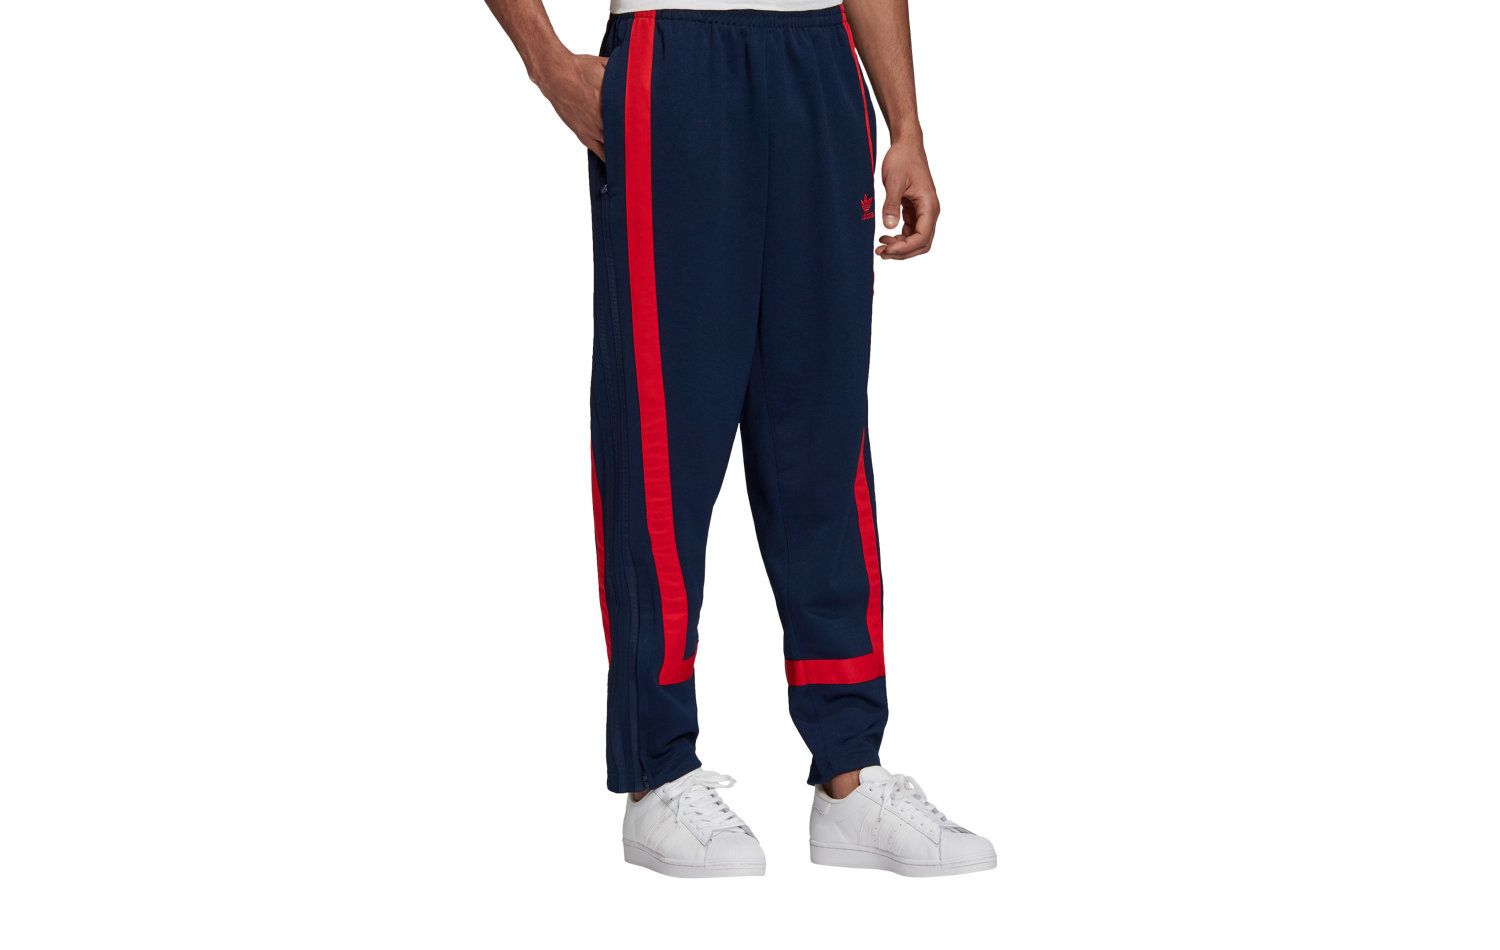 Adidas Warmup Track Pant, Collegiate Navy/Col Red férfi nadrág eladó